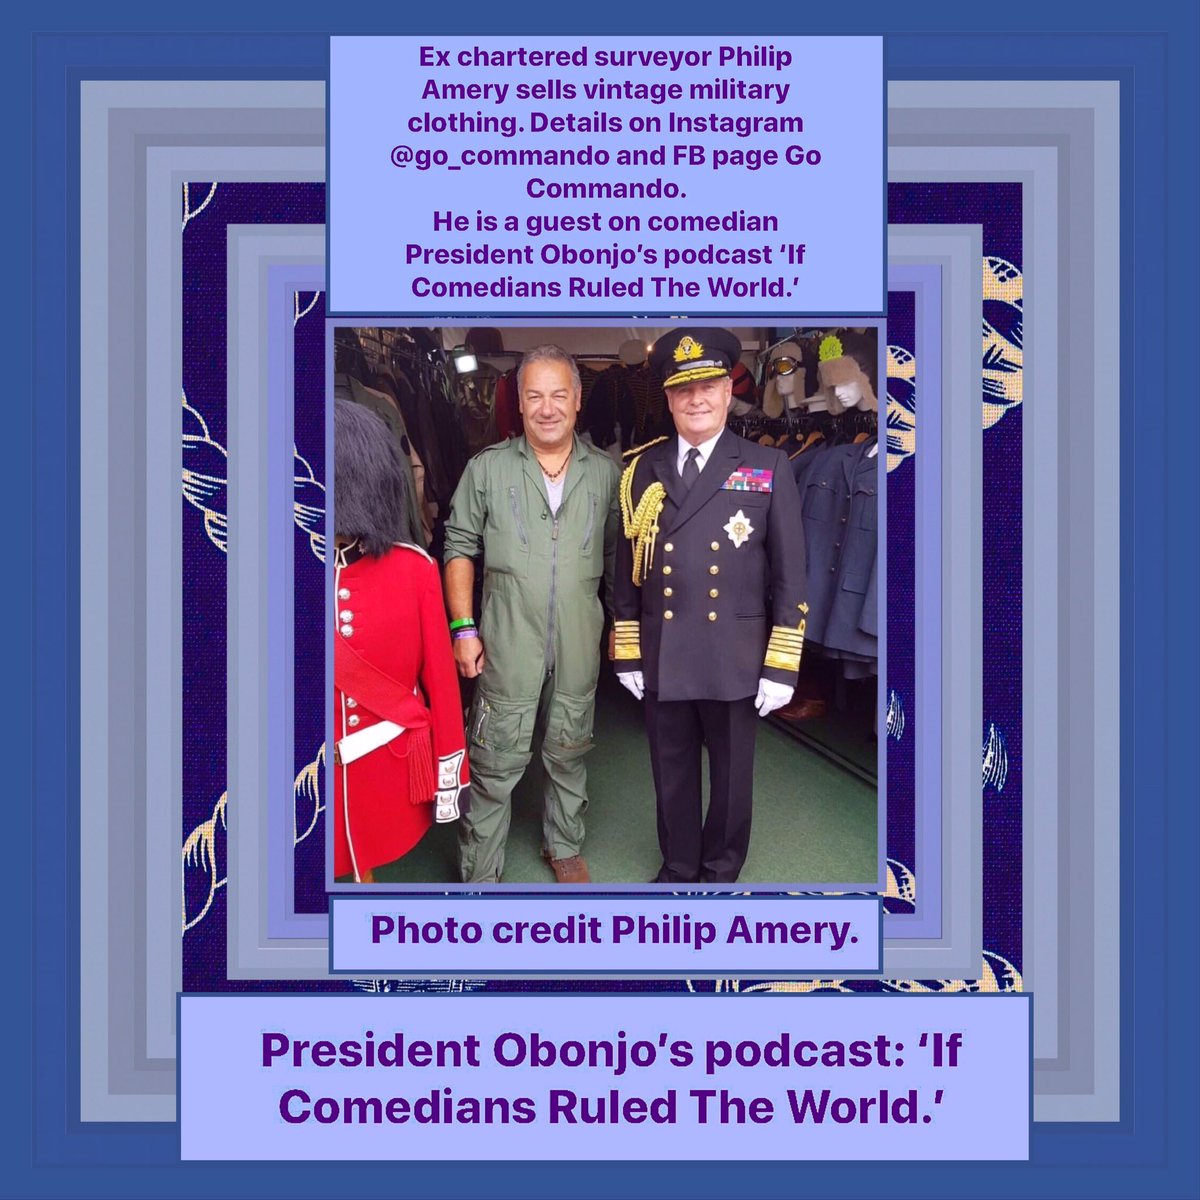 Philip Amery sells #vintage military clothing & is a guest on #PresidentObonjo @realObonjo’s #podcast ‘If Comedians Ruled The World.’

#100daysofcode #digitalmarketing #affiliatemarketing #london #militaryclothing #philipamery #ifcomediansruledtheworld

youtu.be/ww53JdK2R6Q